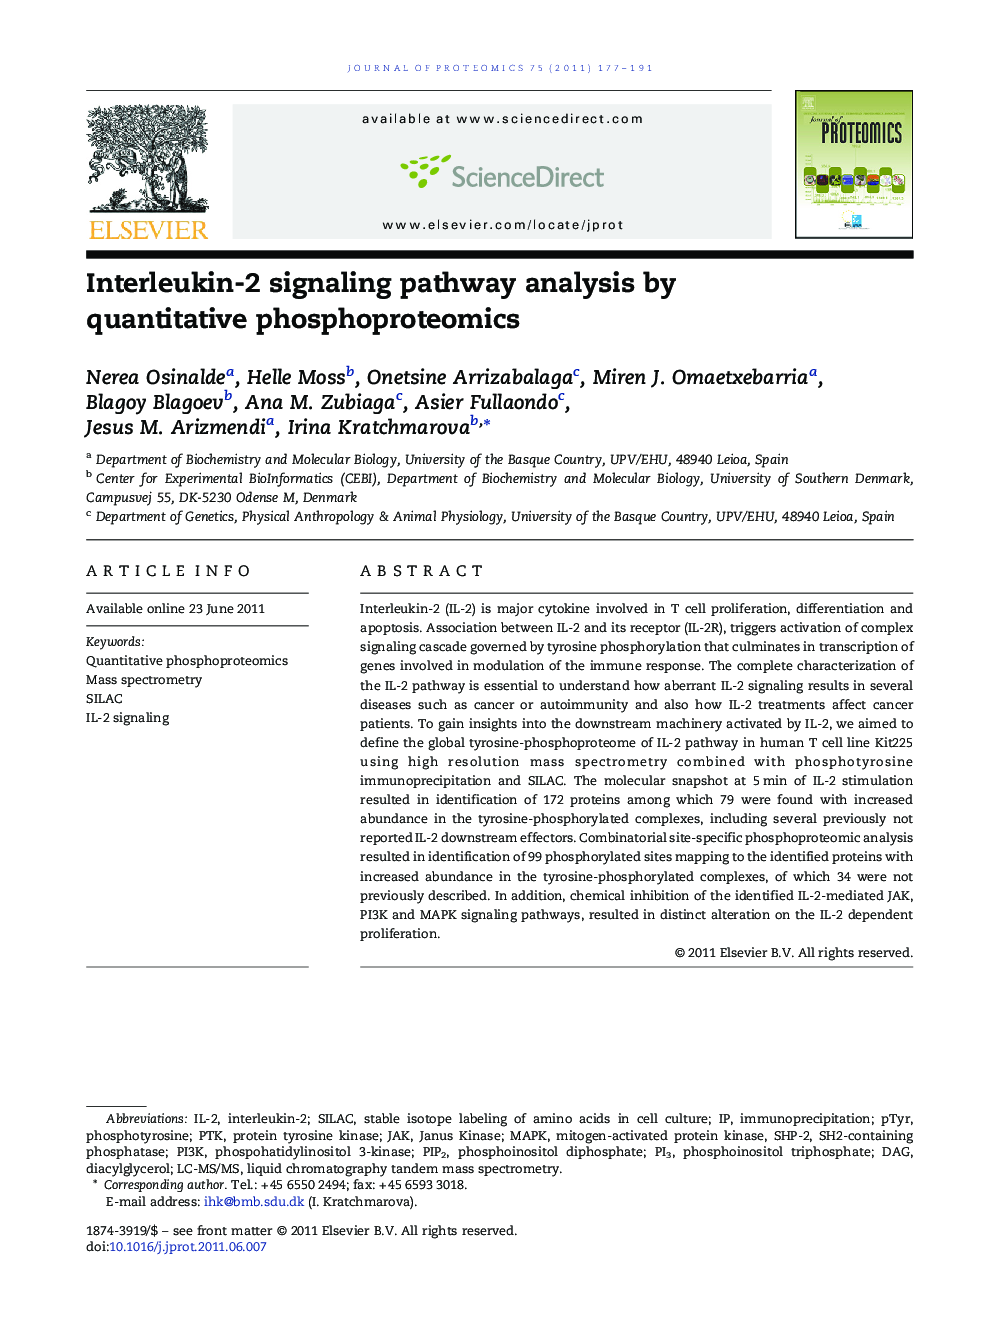 Interleukin-2 signaling pathway analysis by quantitative phosphoproteomics